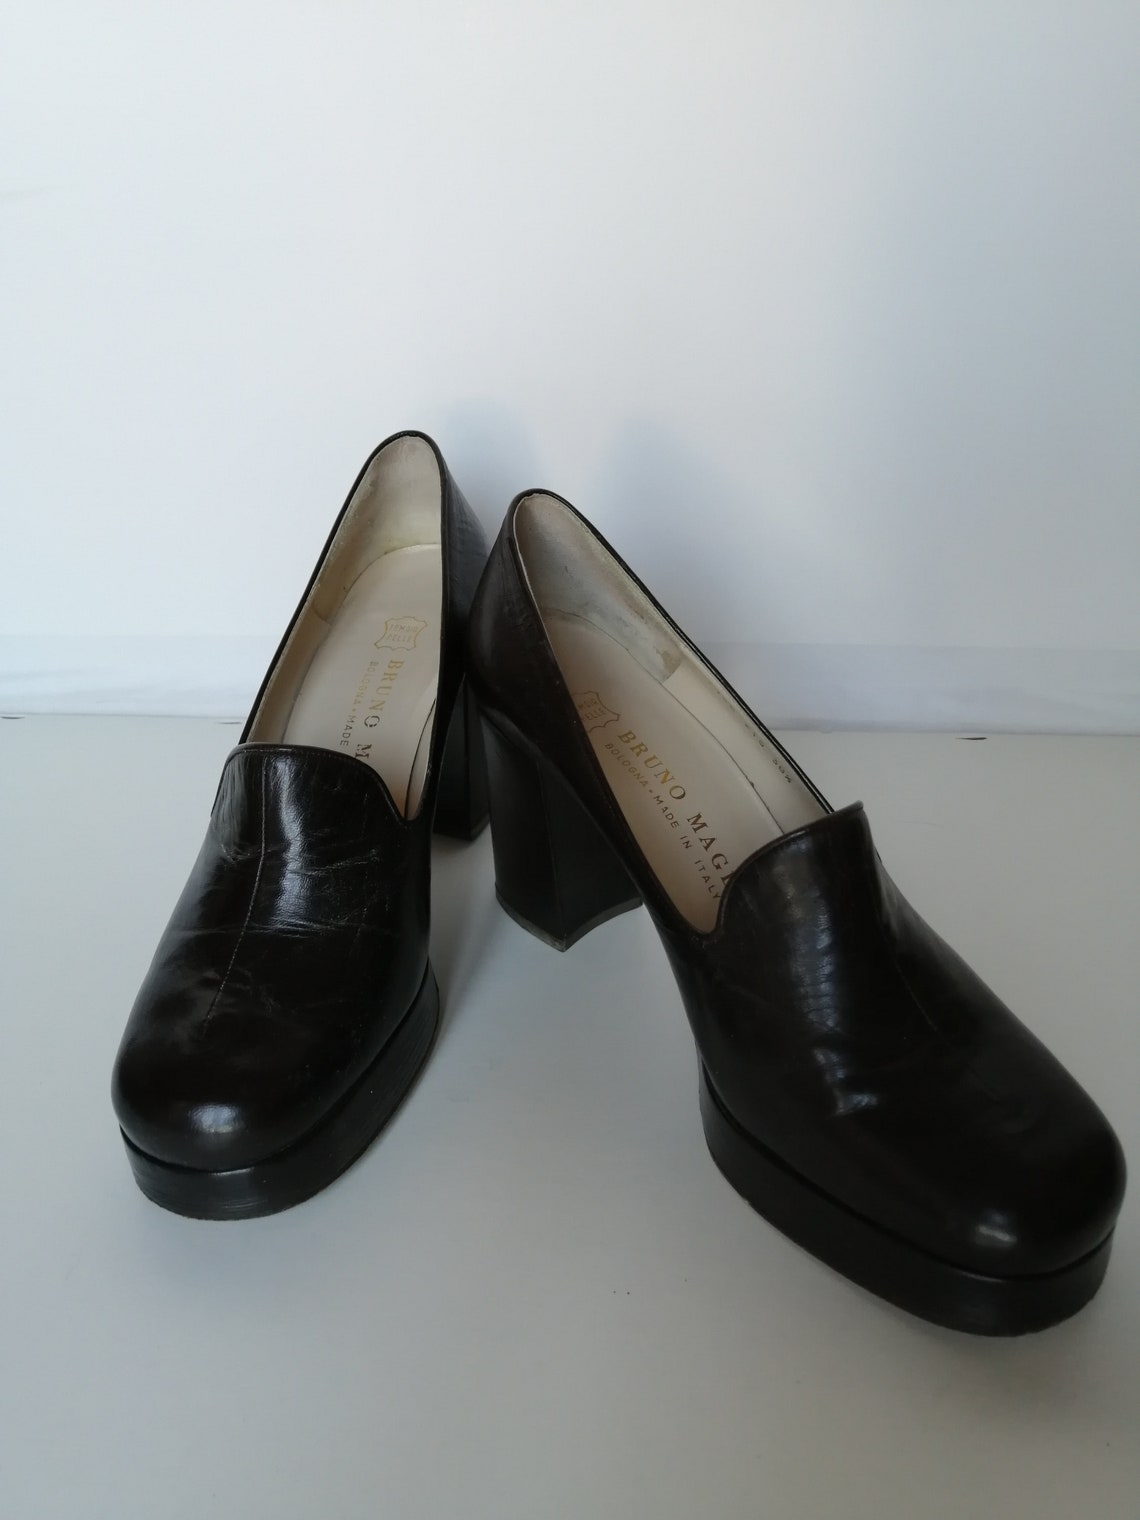 USED vintage Bruno Magli Italian shoes size 39 EU | Etsy